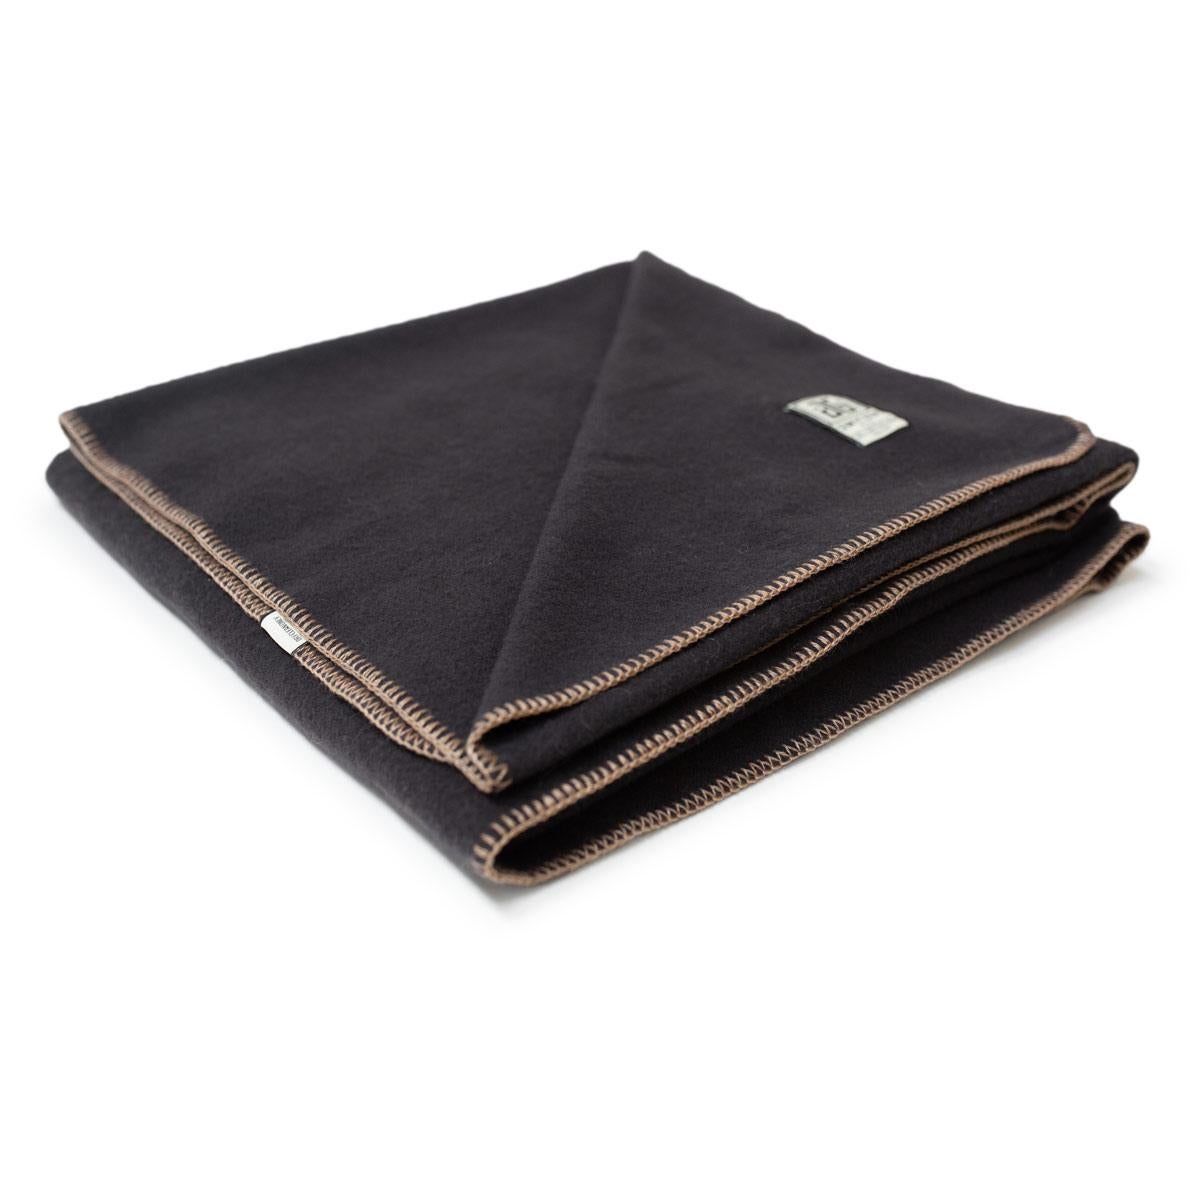 Woven JG Classic Blanket 100% Merino Wool in Bark - King For Sale